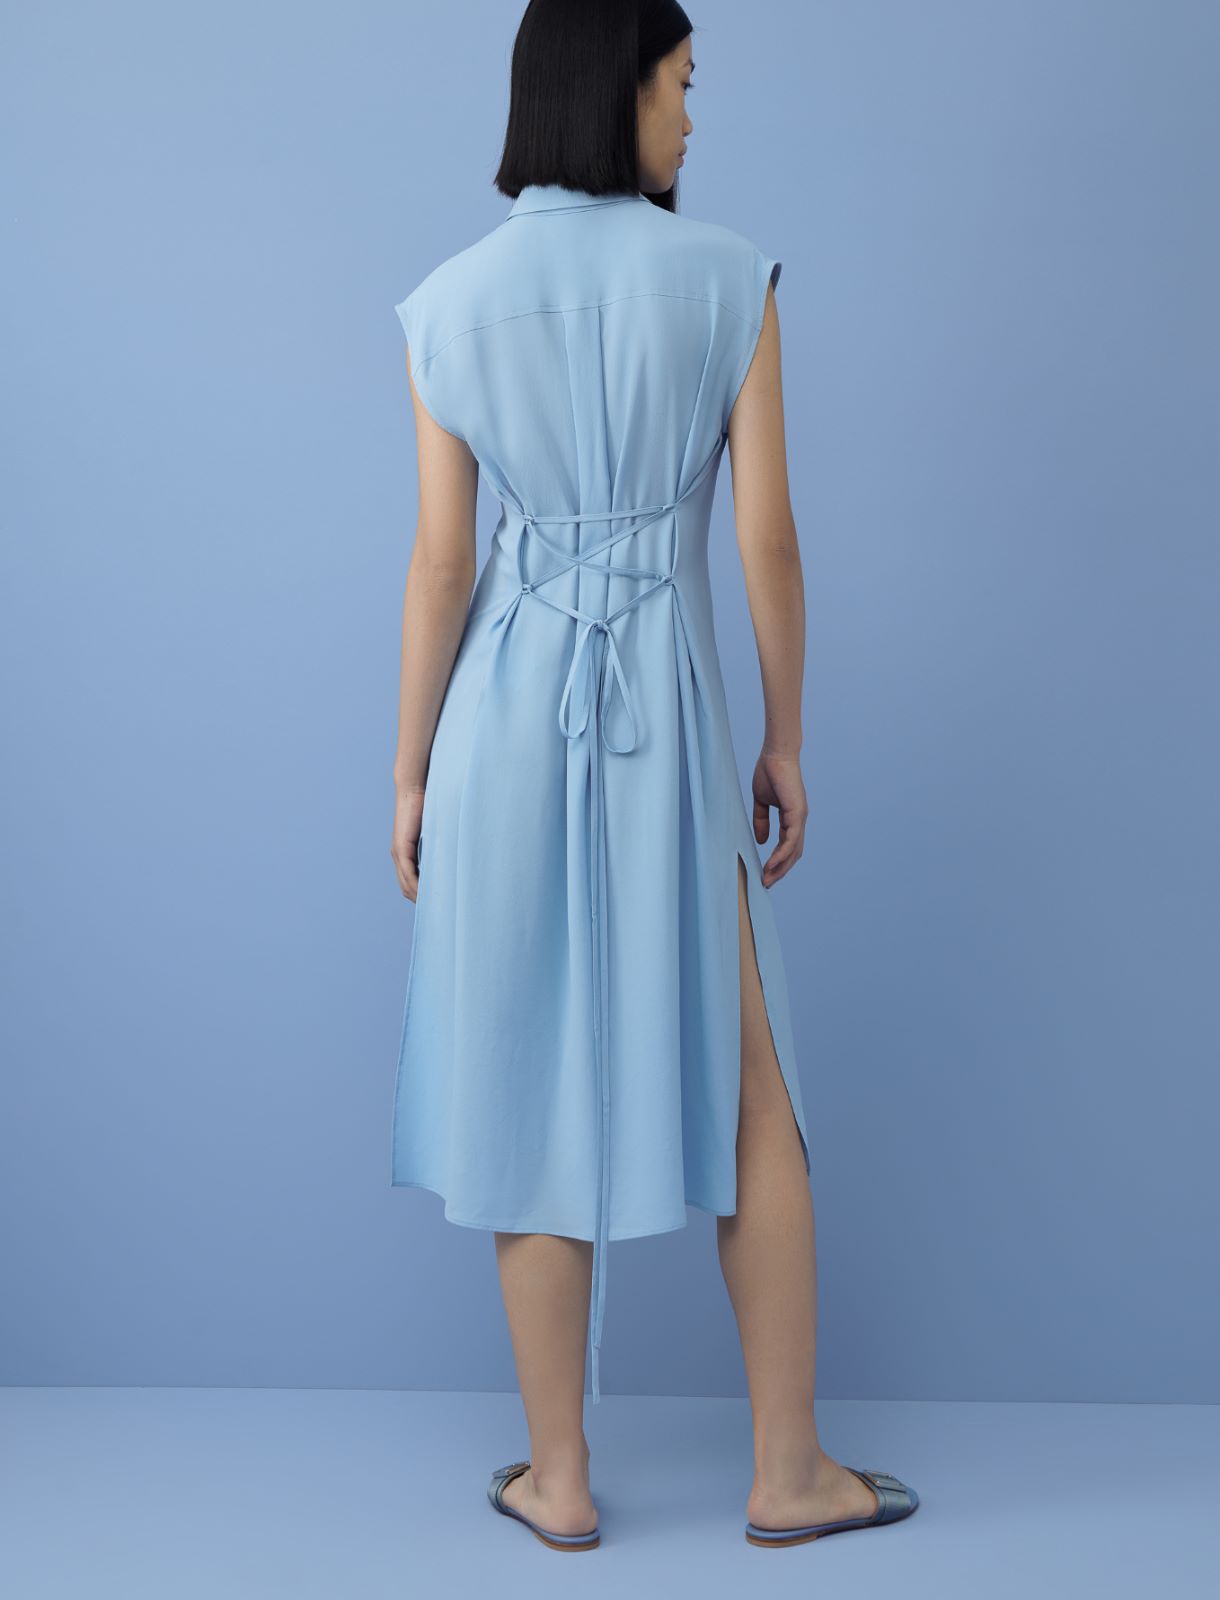 Sleeveless dress - Light blue - Marina Rinaldi - 2